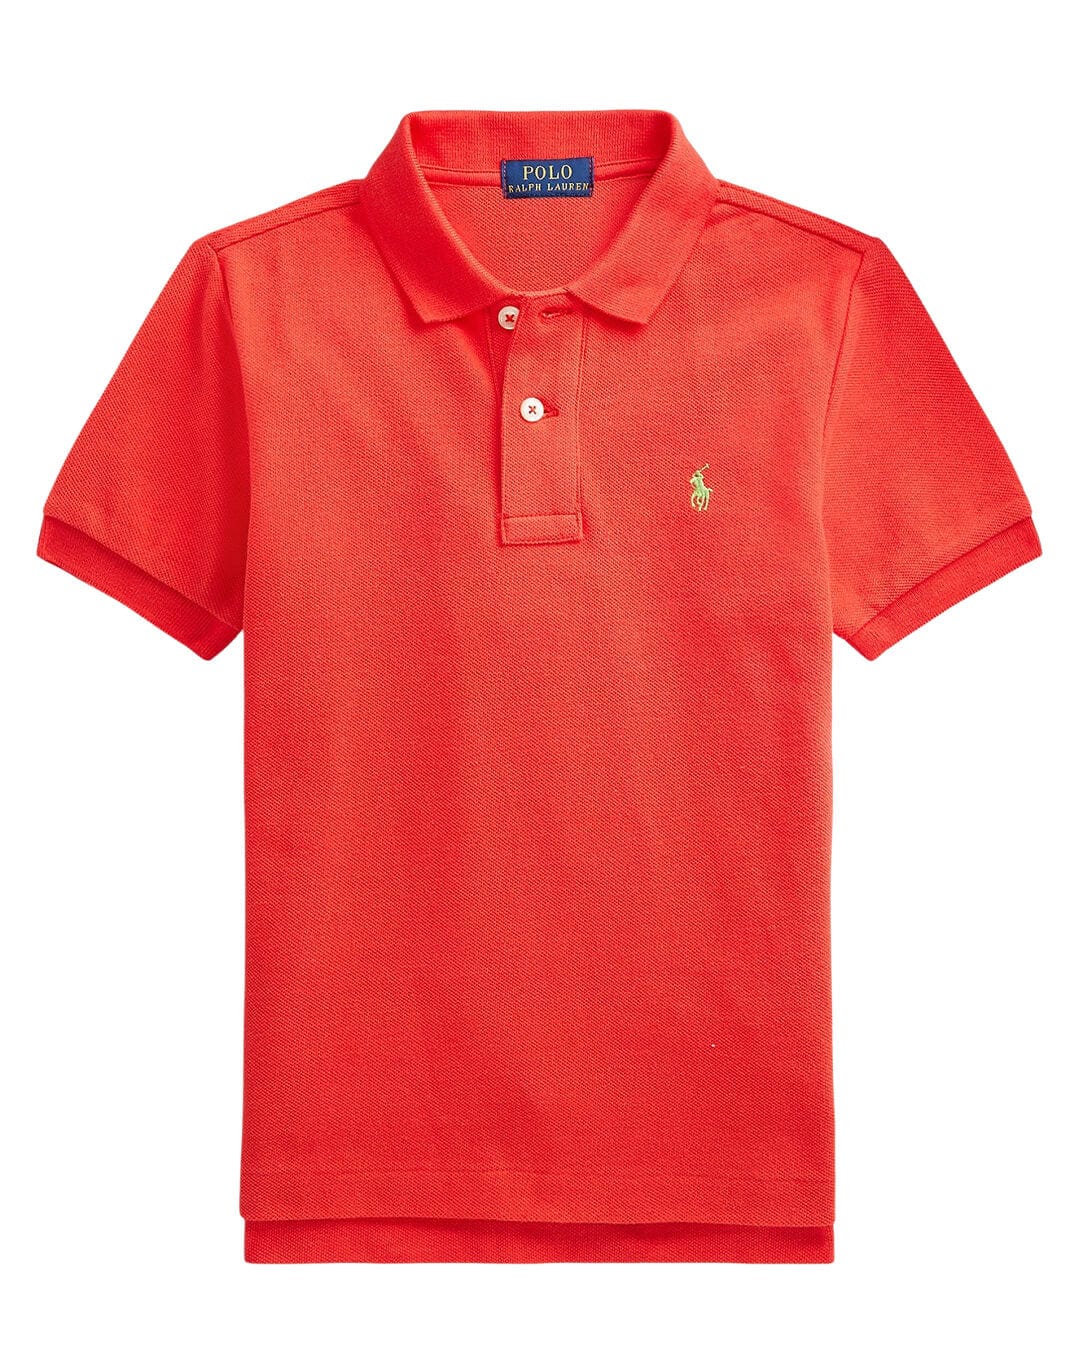 Polo Ralph Lauren Polo Shirts Boys Polo Ralph Lauren Hibiscus Red Polo Shirt